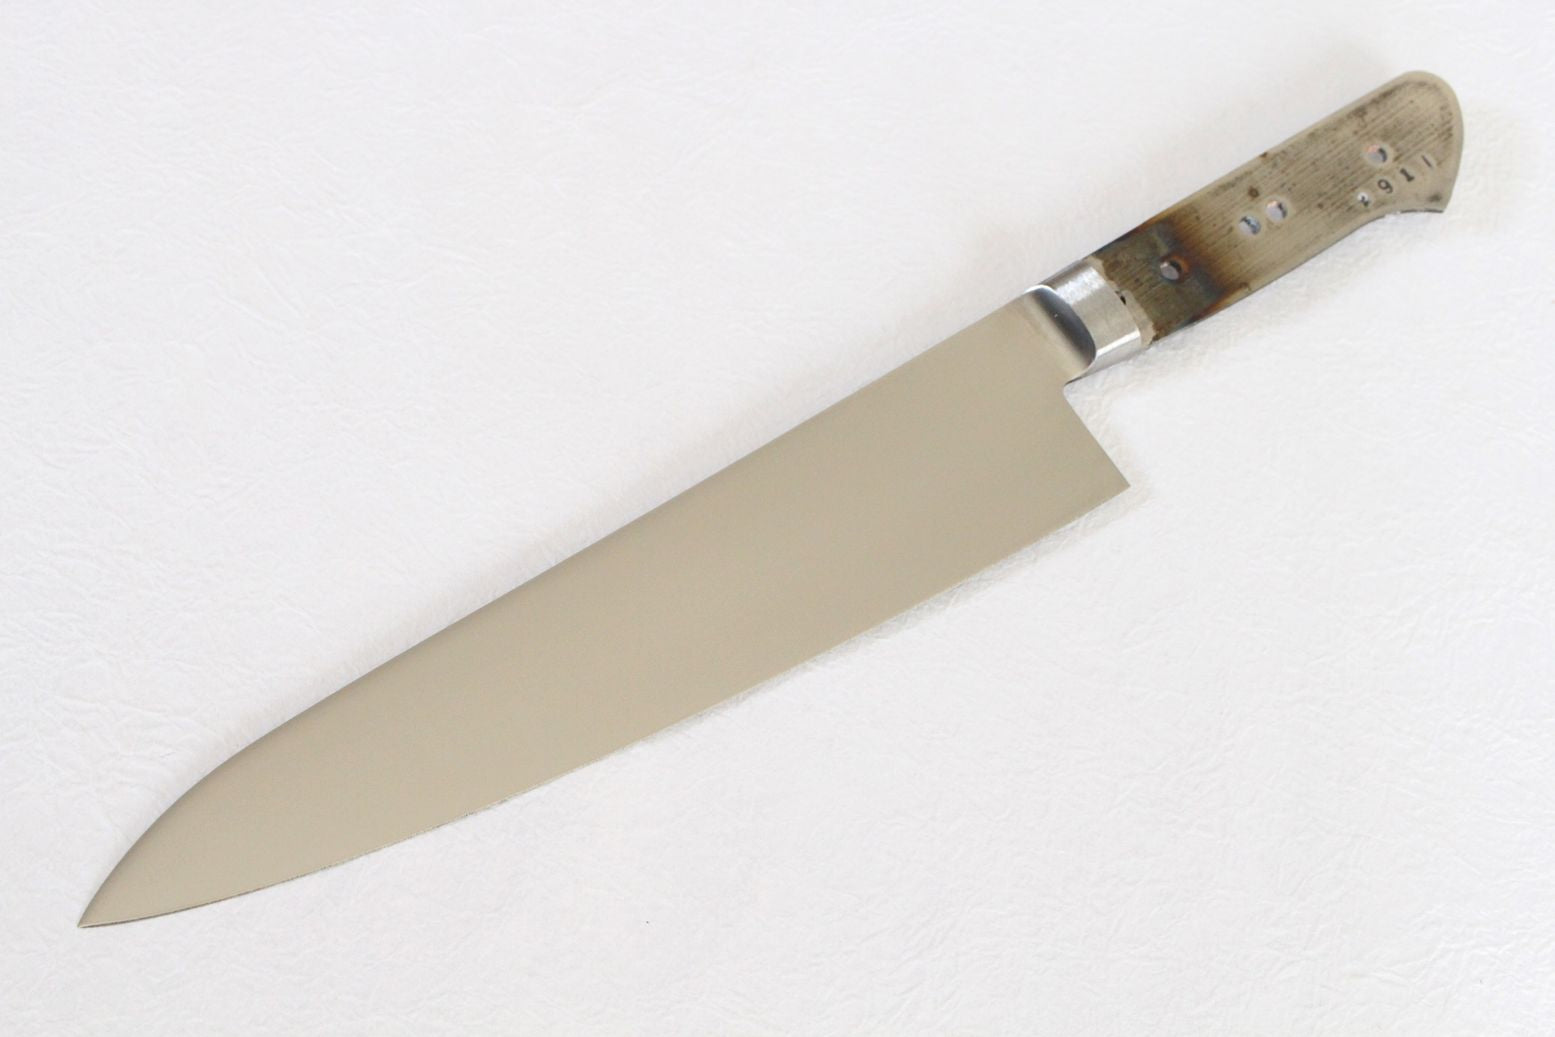 Ibuki AUS-8 steel Kitchen blank blade Gyuto Chef knife 210mm full tang